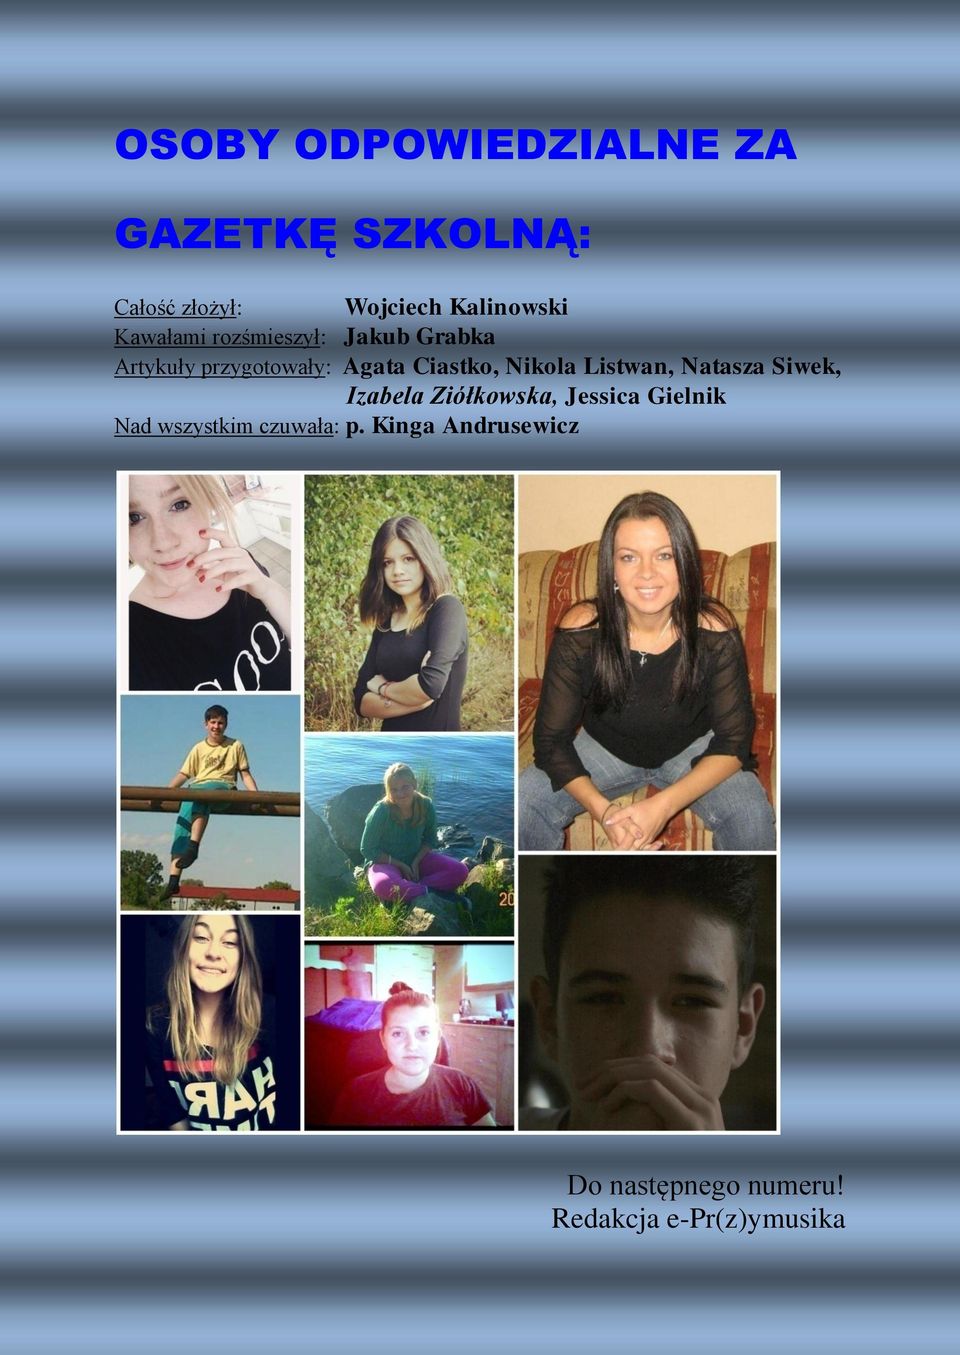 Nikola Listwan, Natasza Siwek, Izabela Ziółkowska, Jessica Gielnik Nad